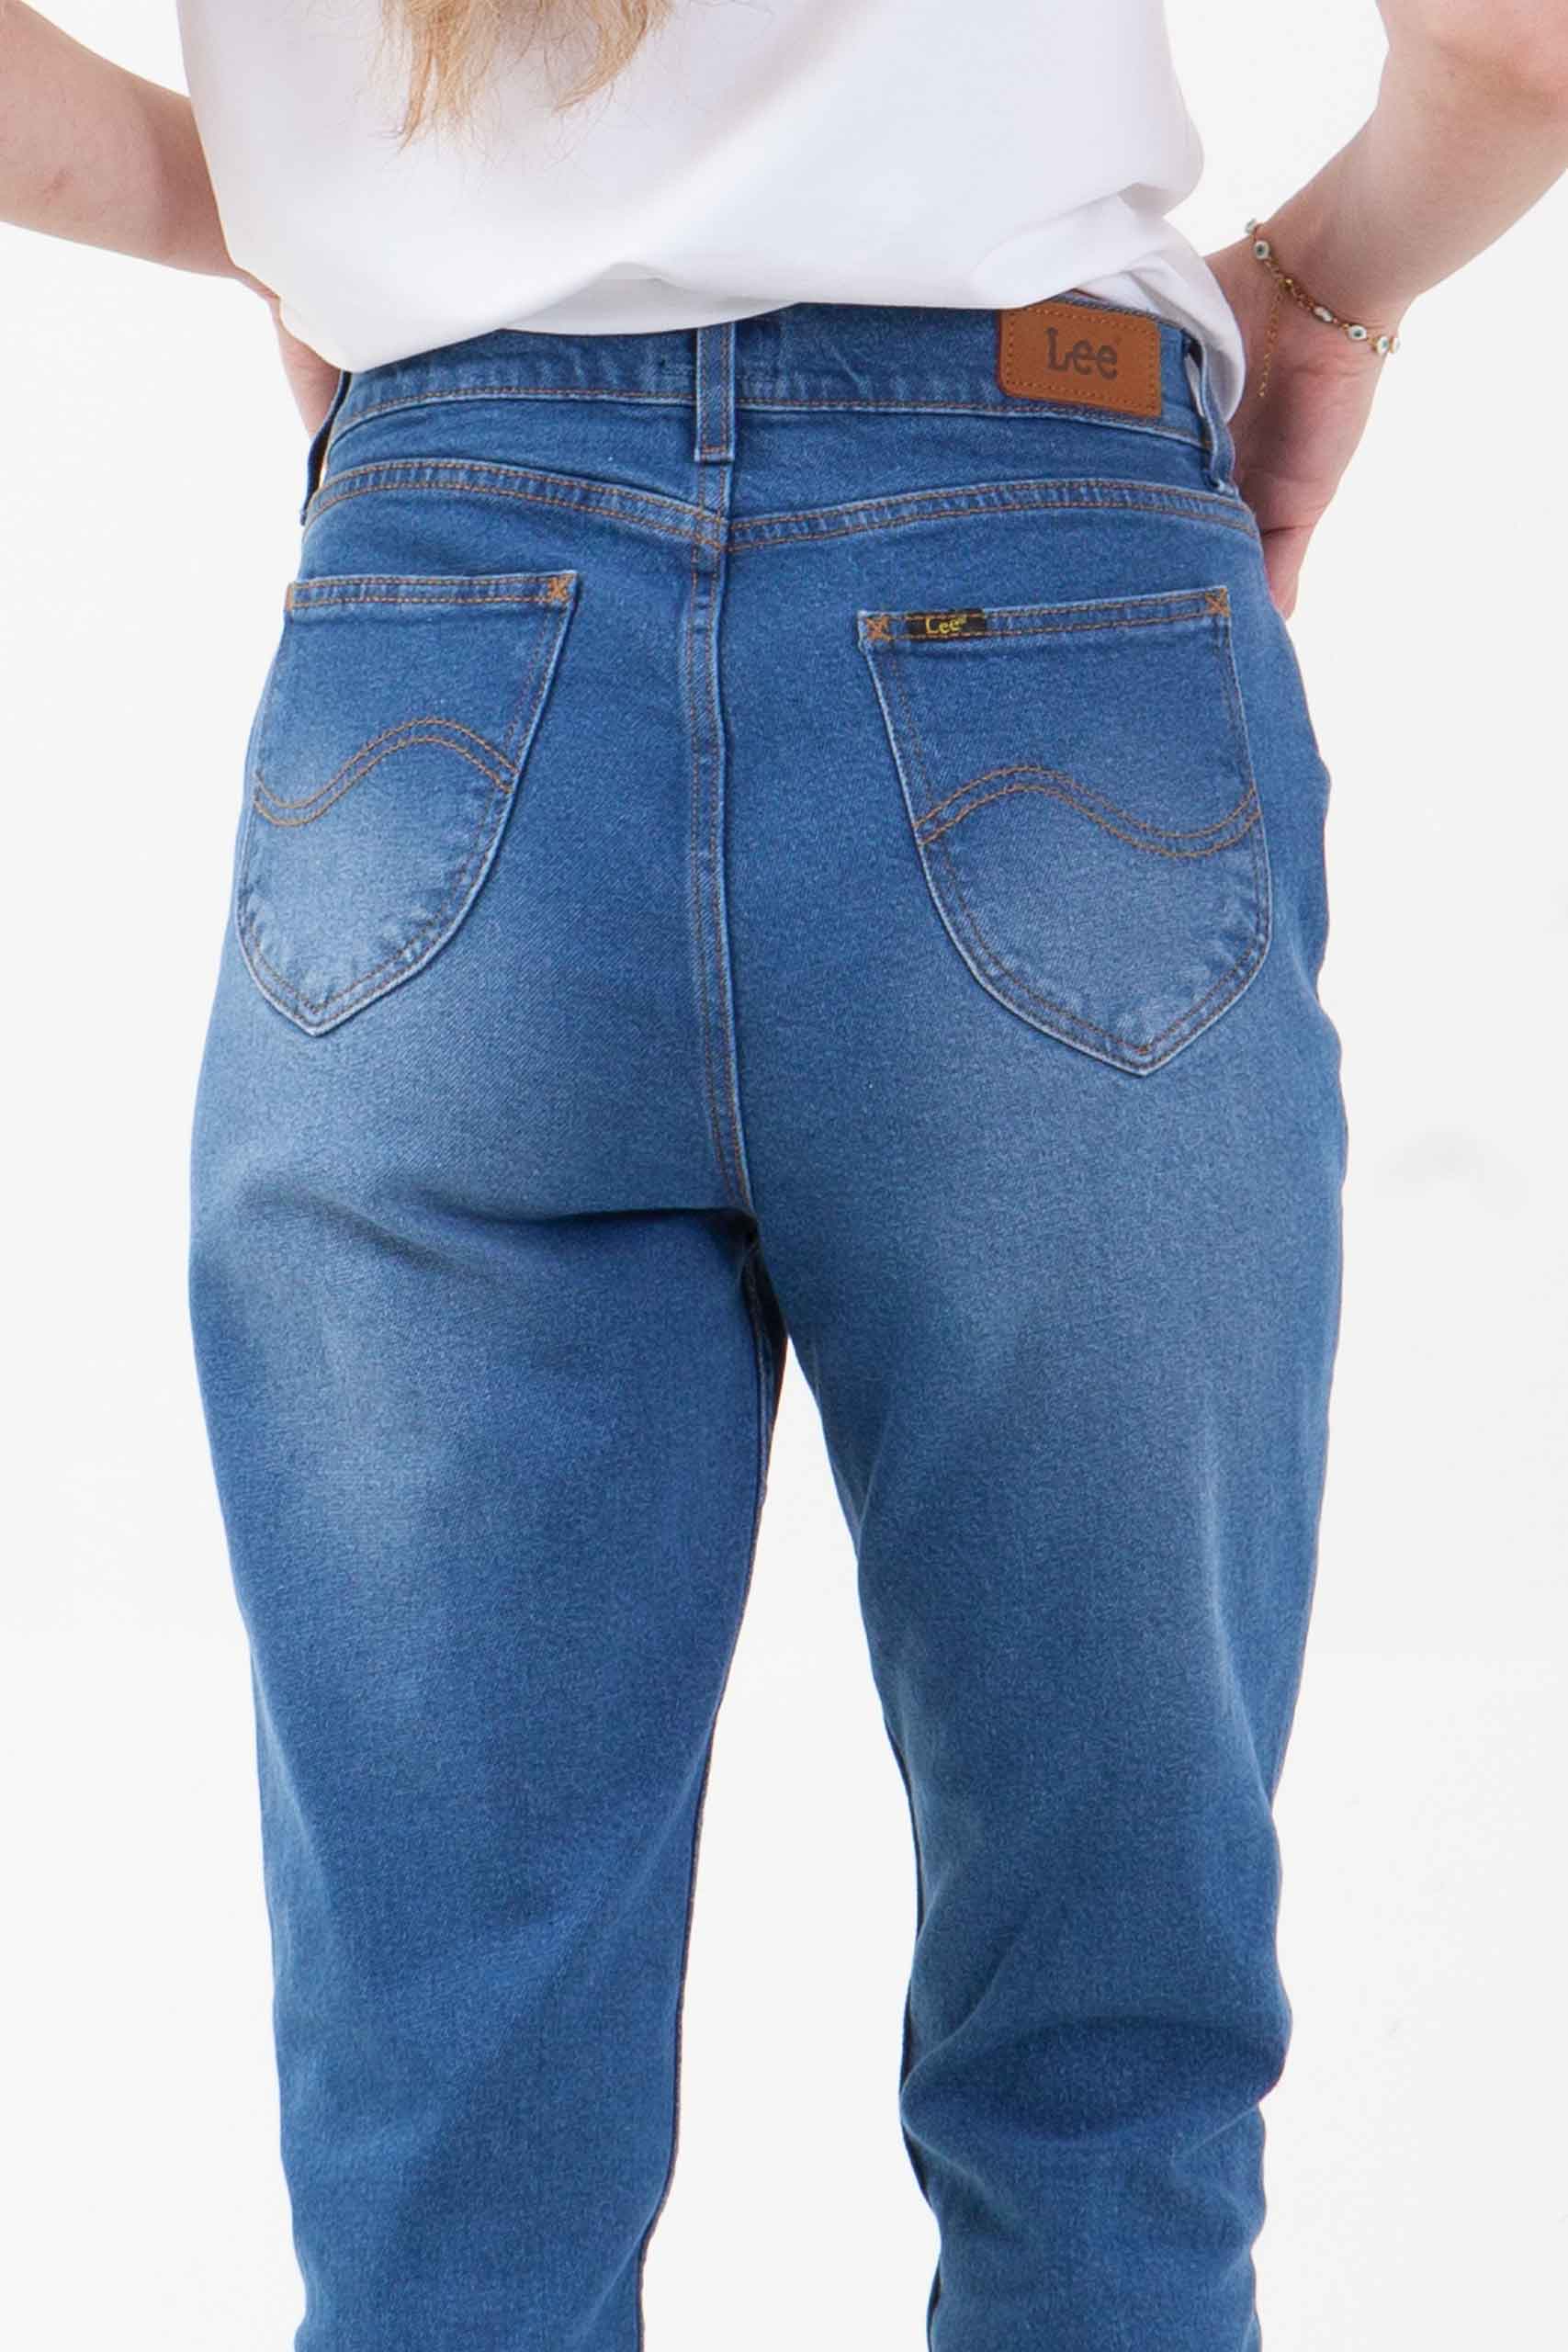 Vista posterior de pantalón de color azul con dos bolsillos de marca lee